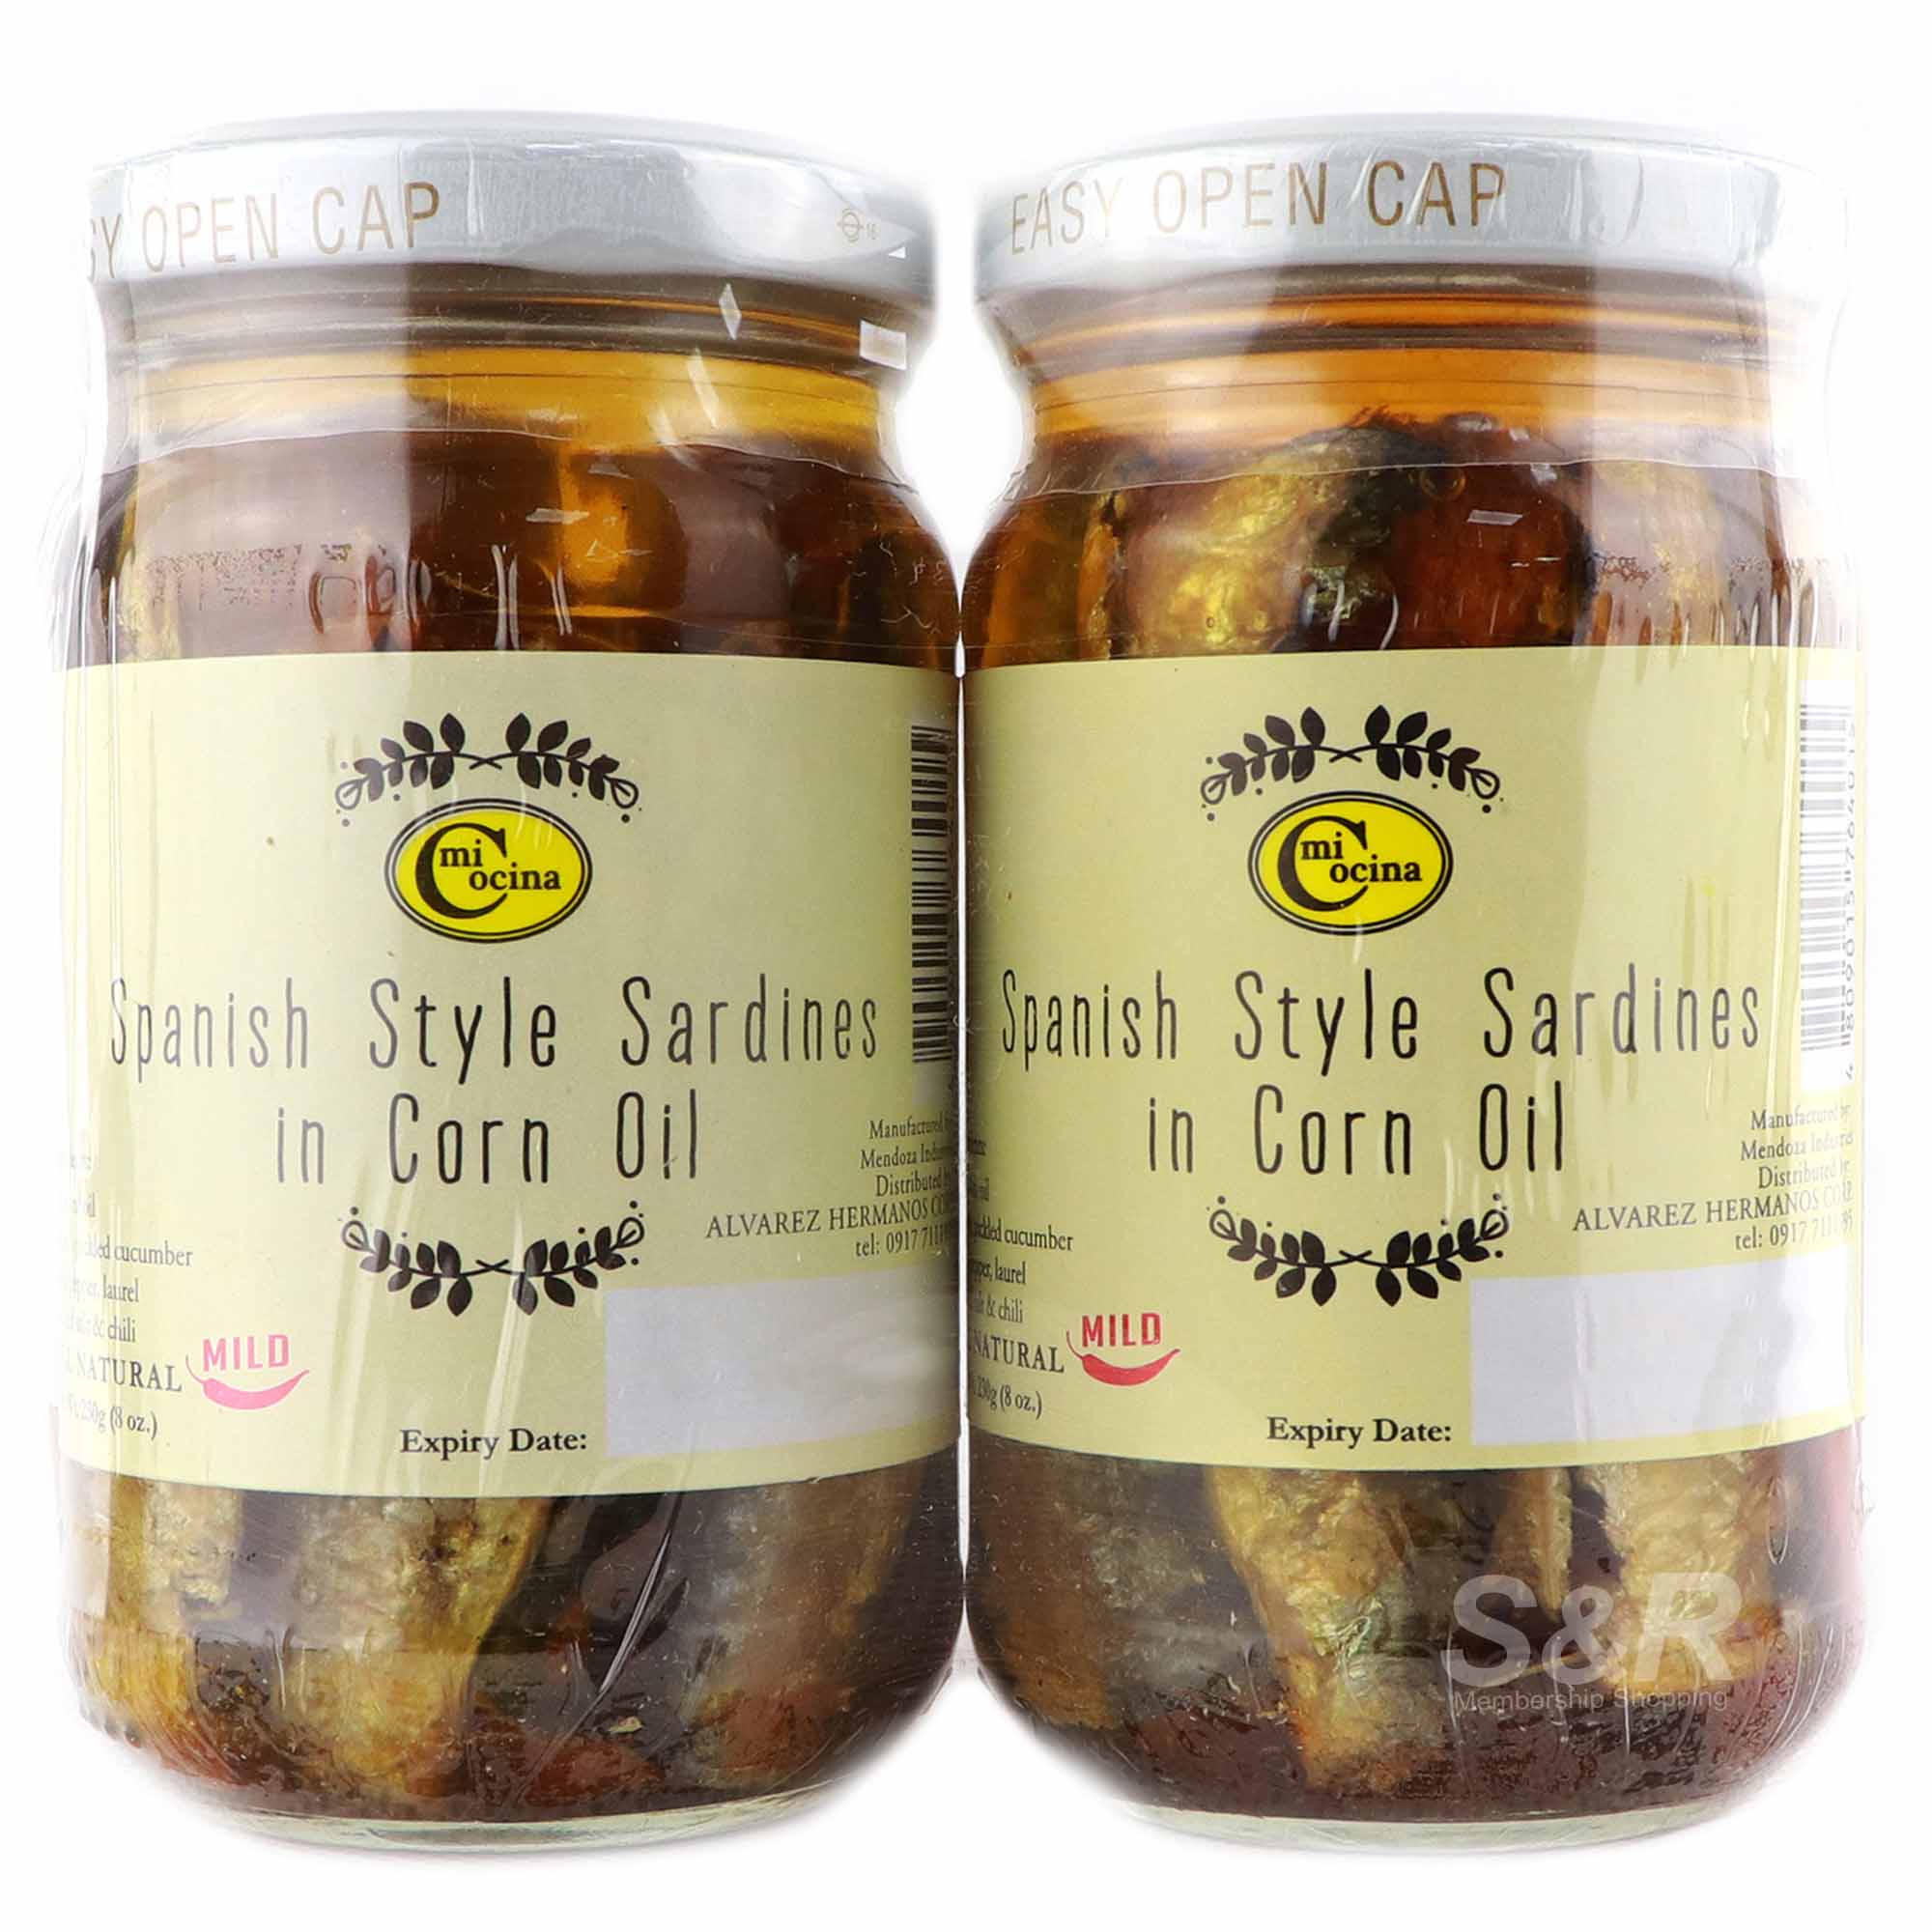 Mi Cocina Spanish Style Sardines in Corn Oil Mild Spicy 2 jars